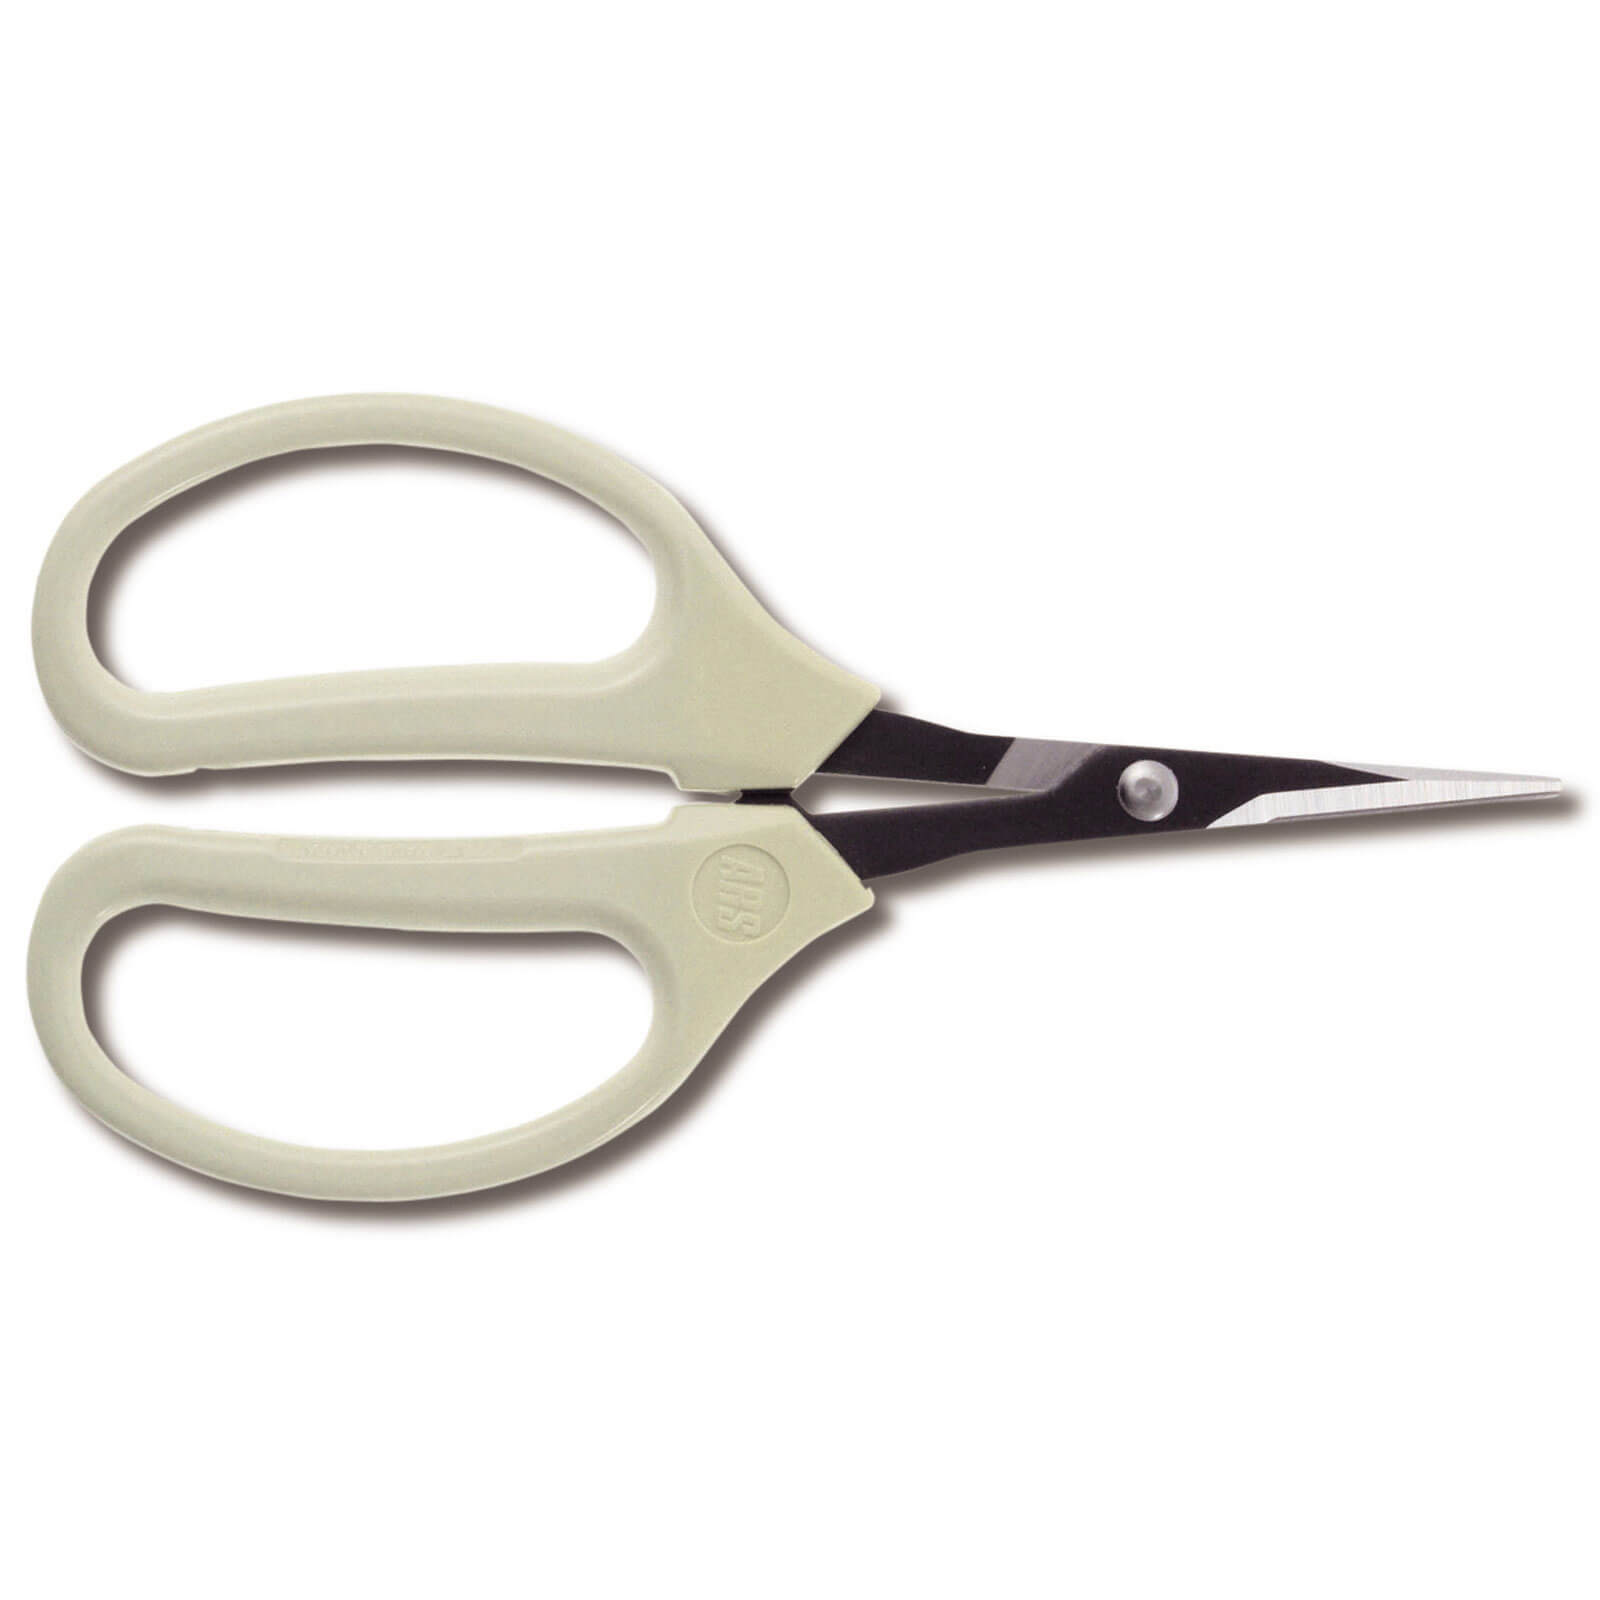 Image of ARS 320 Straight Fruit Pruner Scissors